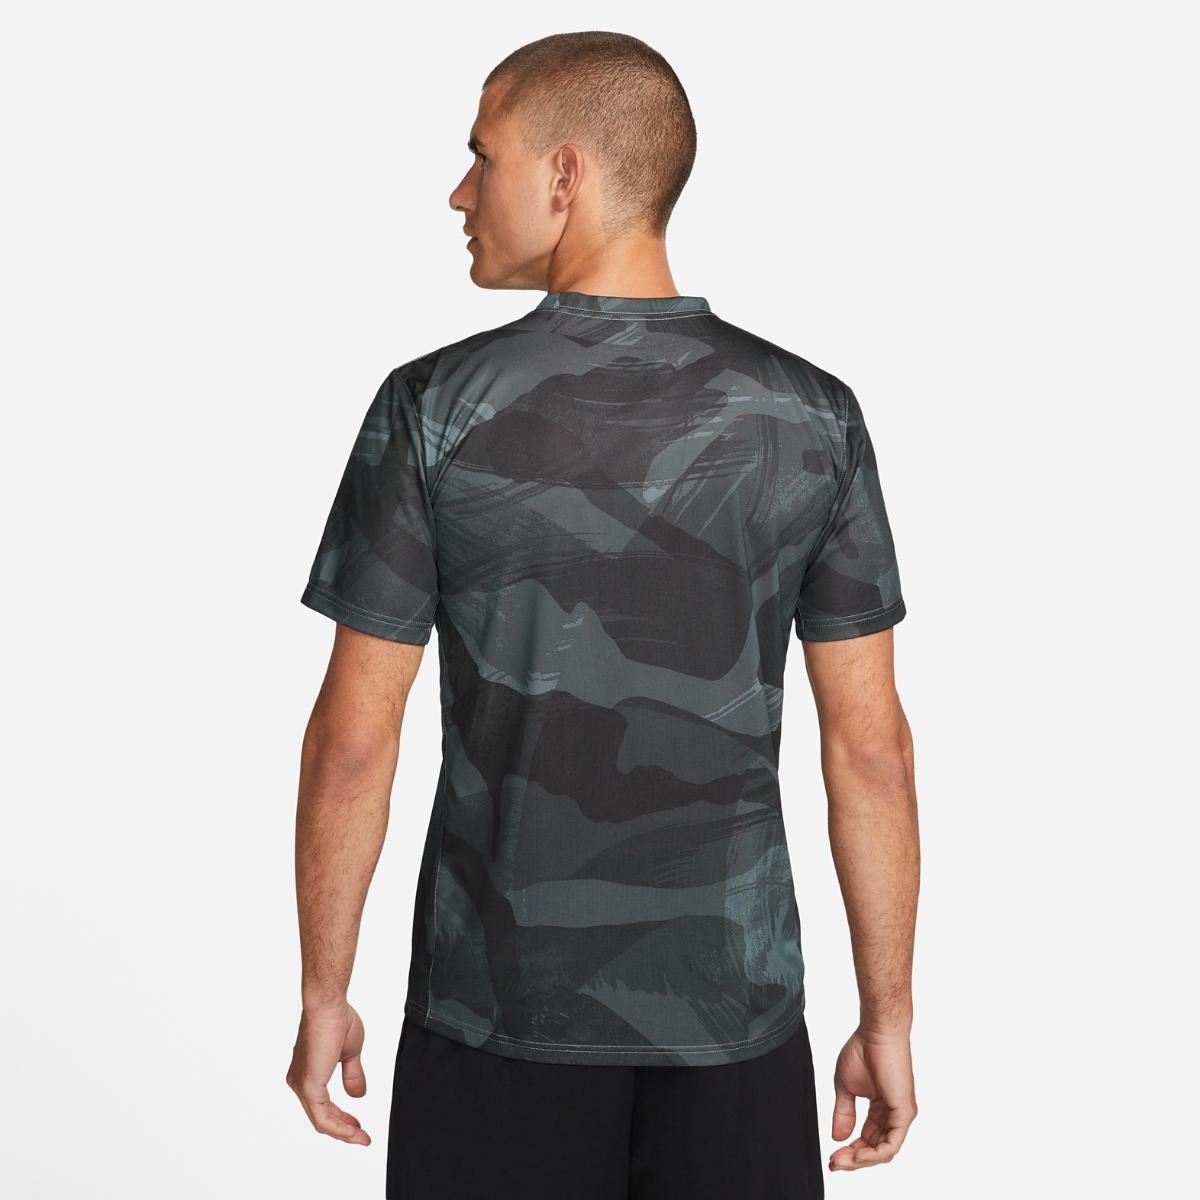 Футболка чоловіча Nike LGD CAMO T-shirt black